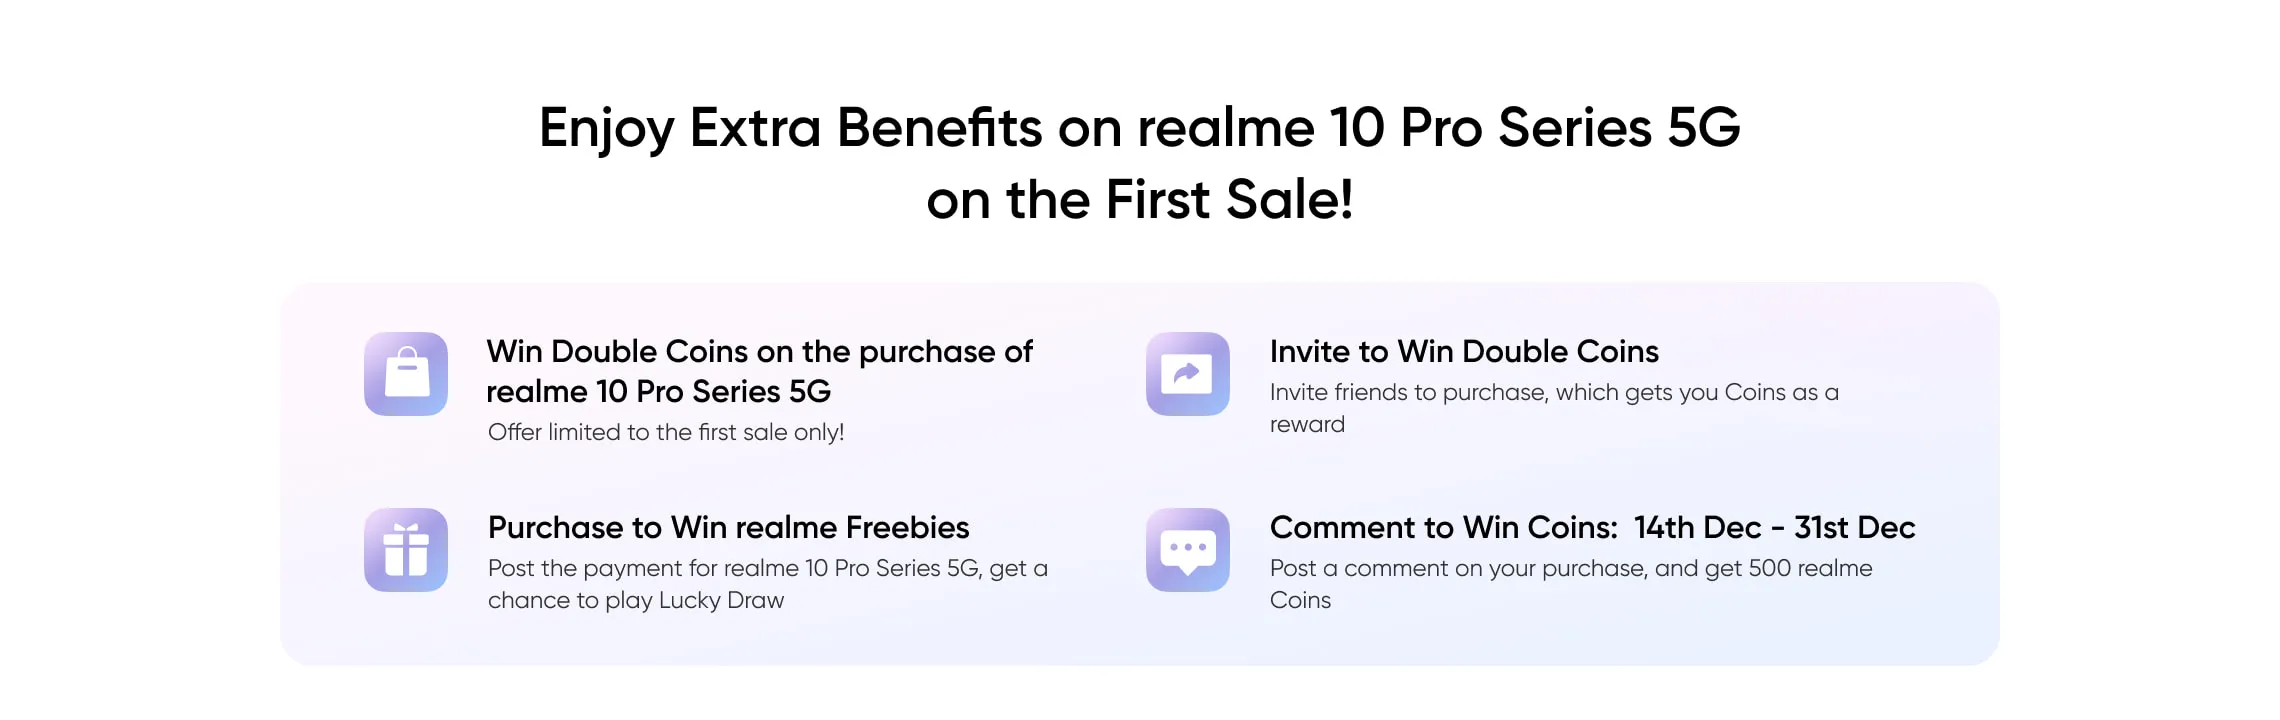 Realme 10 Pro Plus 5G Benefits